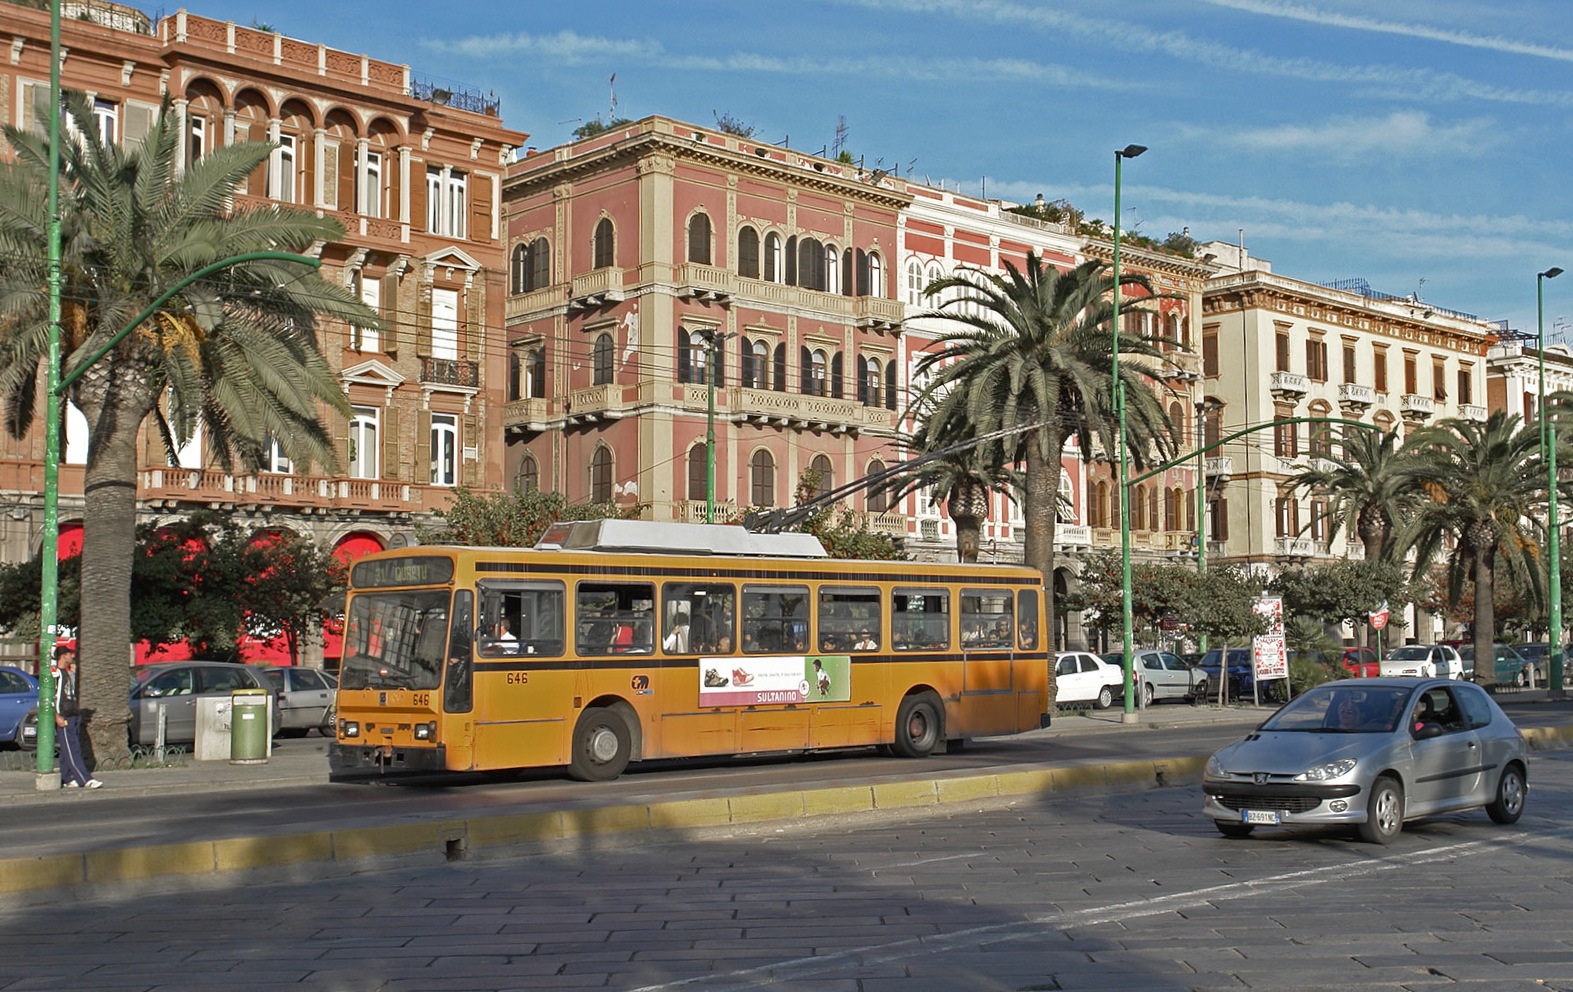 Città metropolitana Cagliari - photo credit: Hans Peter Schaefer